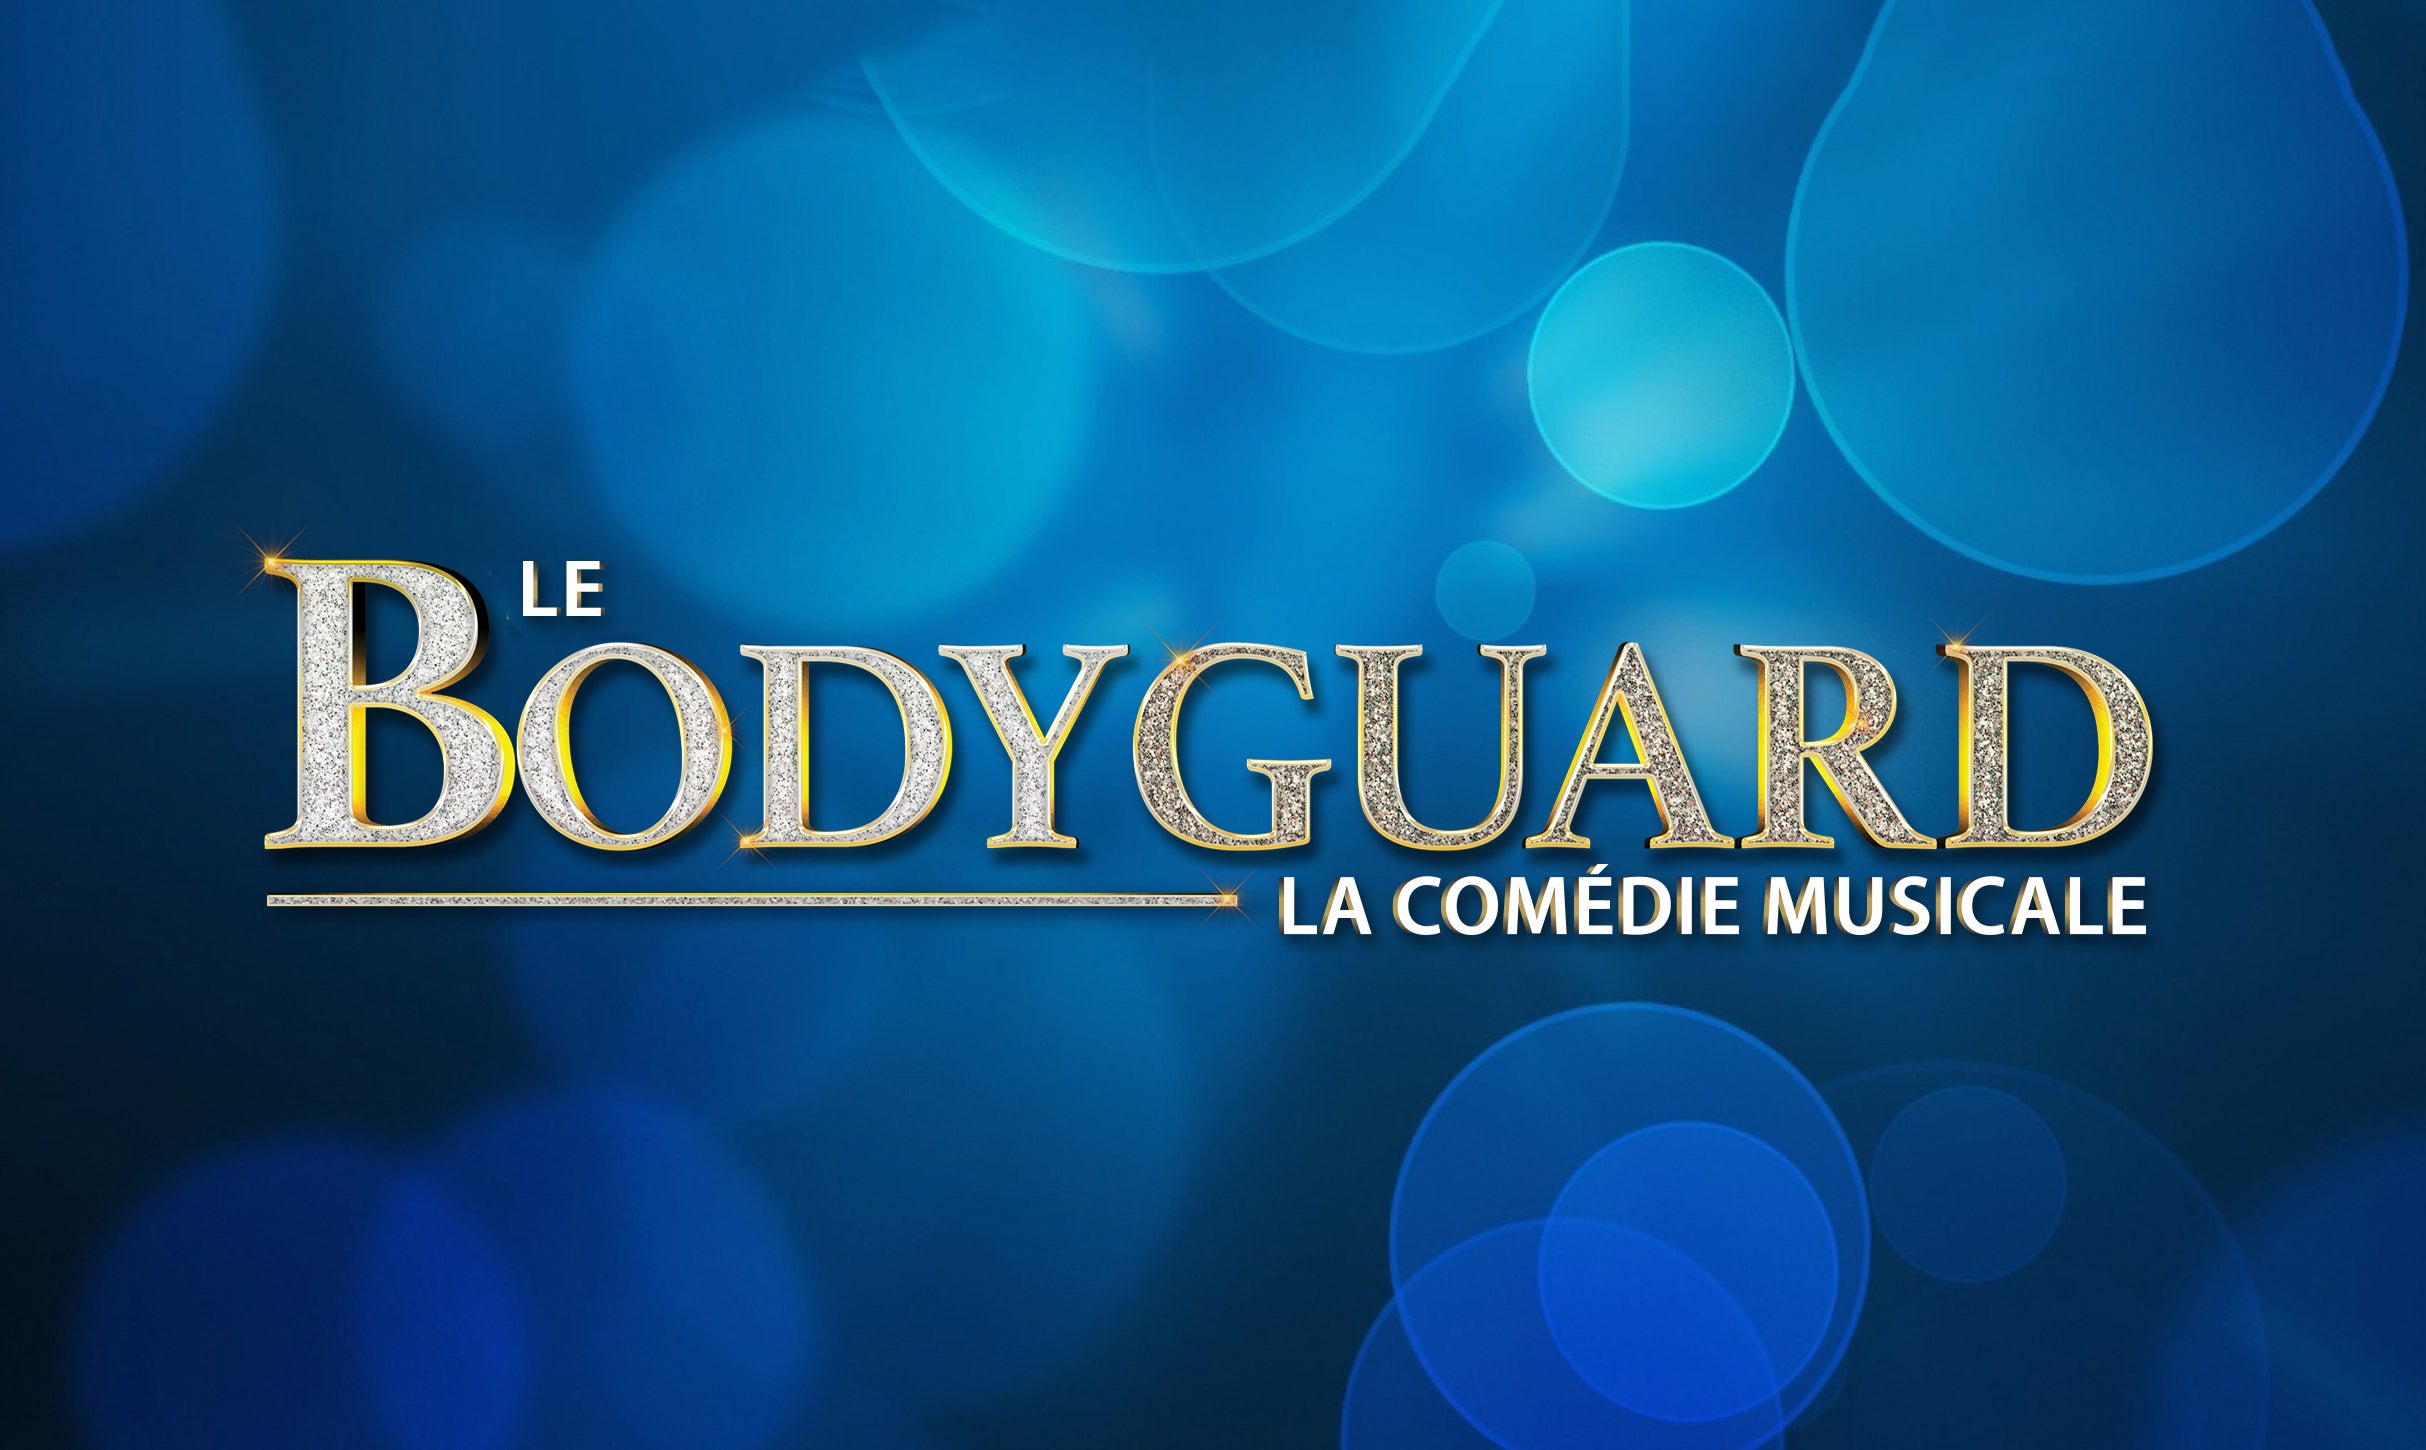 Le Bodyguard - La com&eacute;die musicale presale information on freepresalepasswords.com